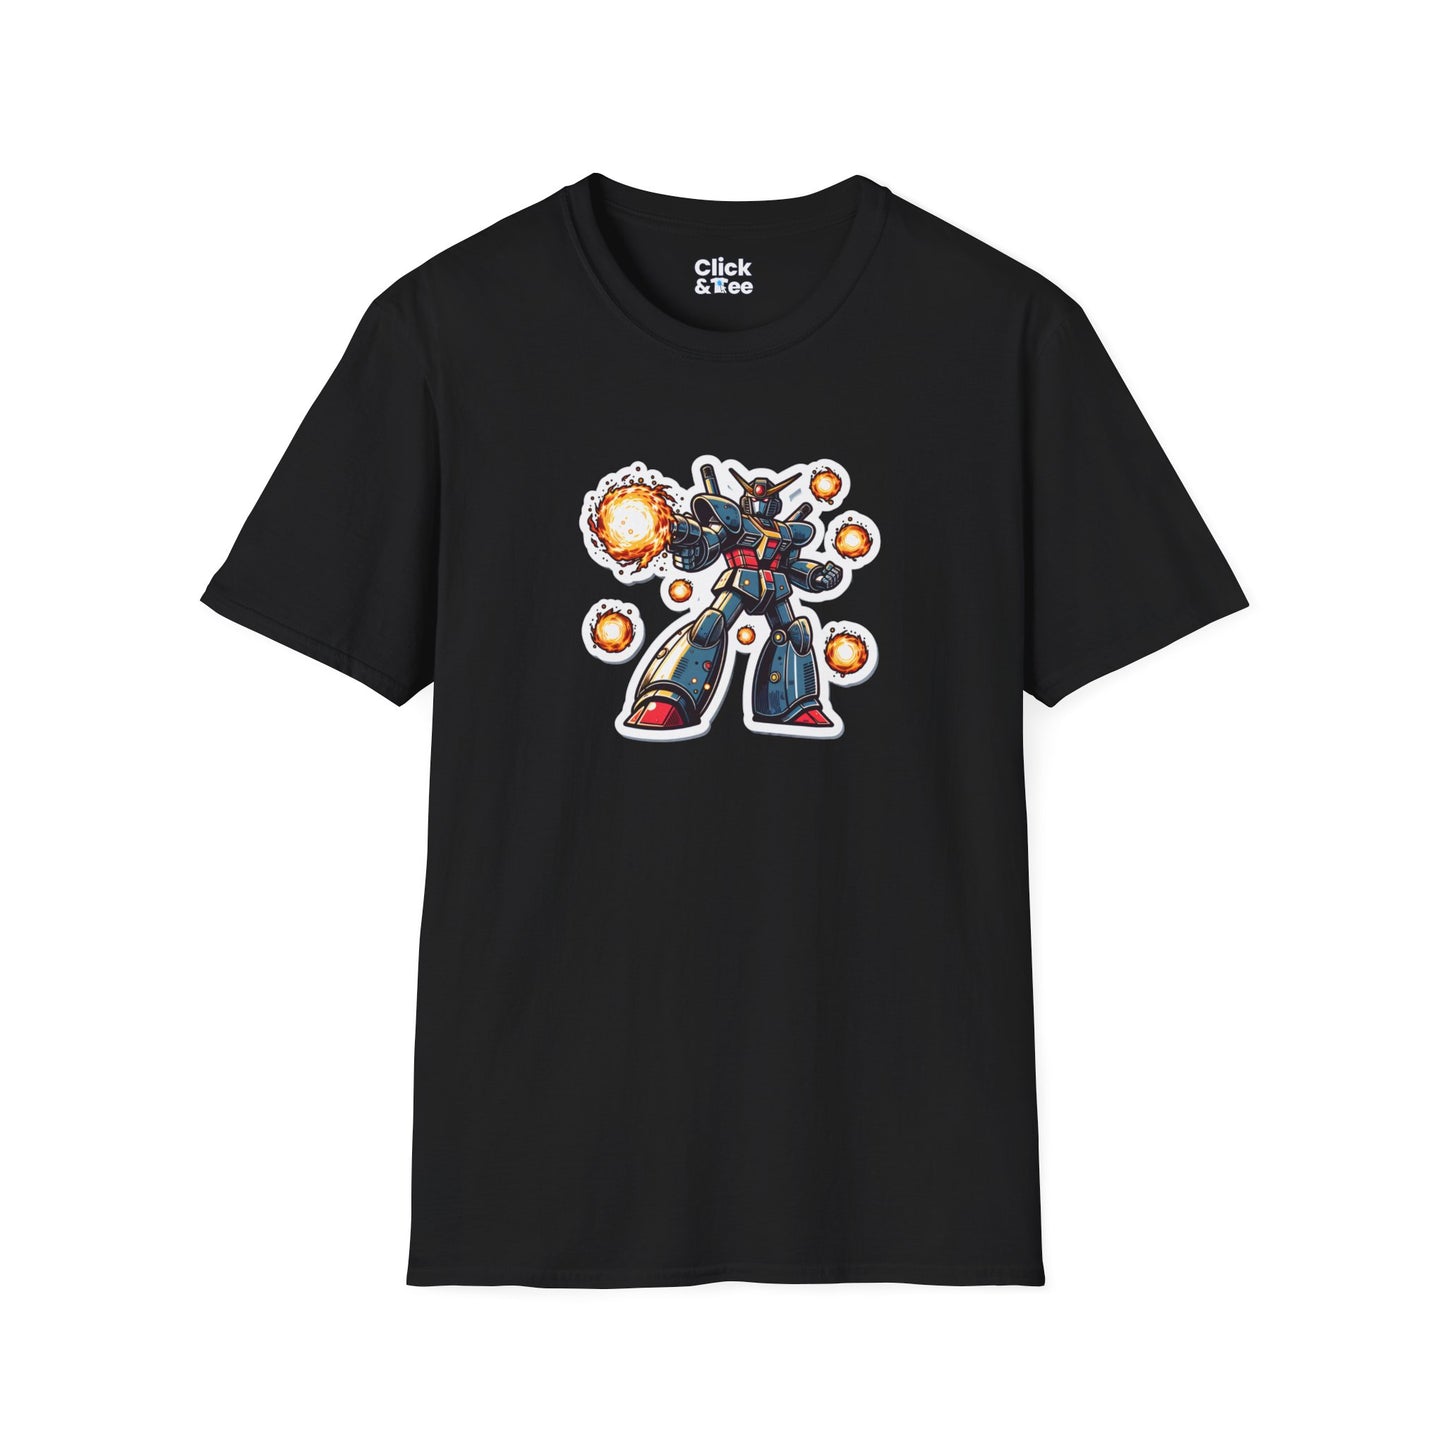 Shonen Anime T-Shirt - Magical Robot Shooting fireballs - Shonen Anime Style T-Shirt